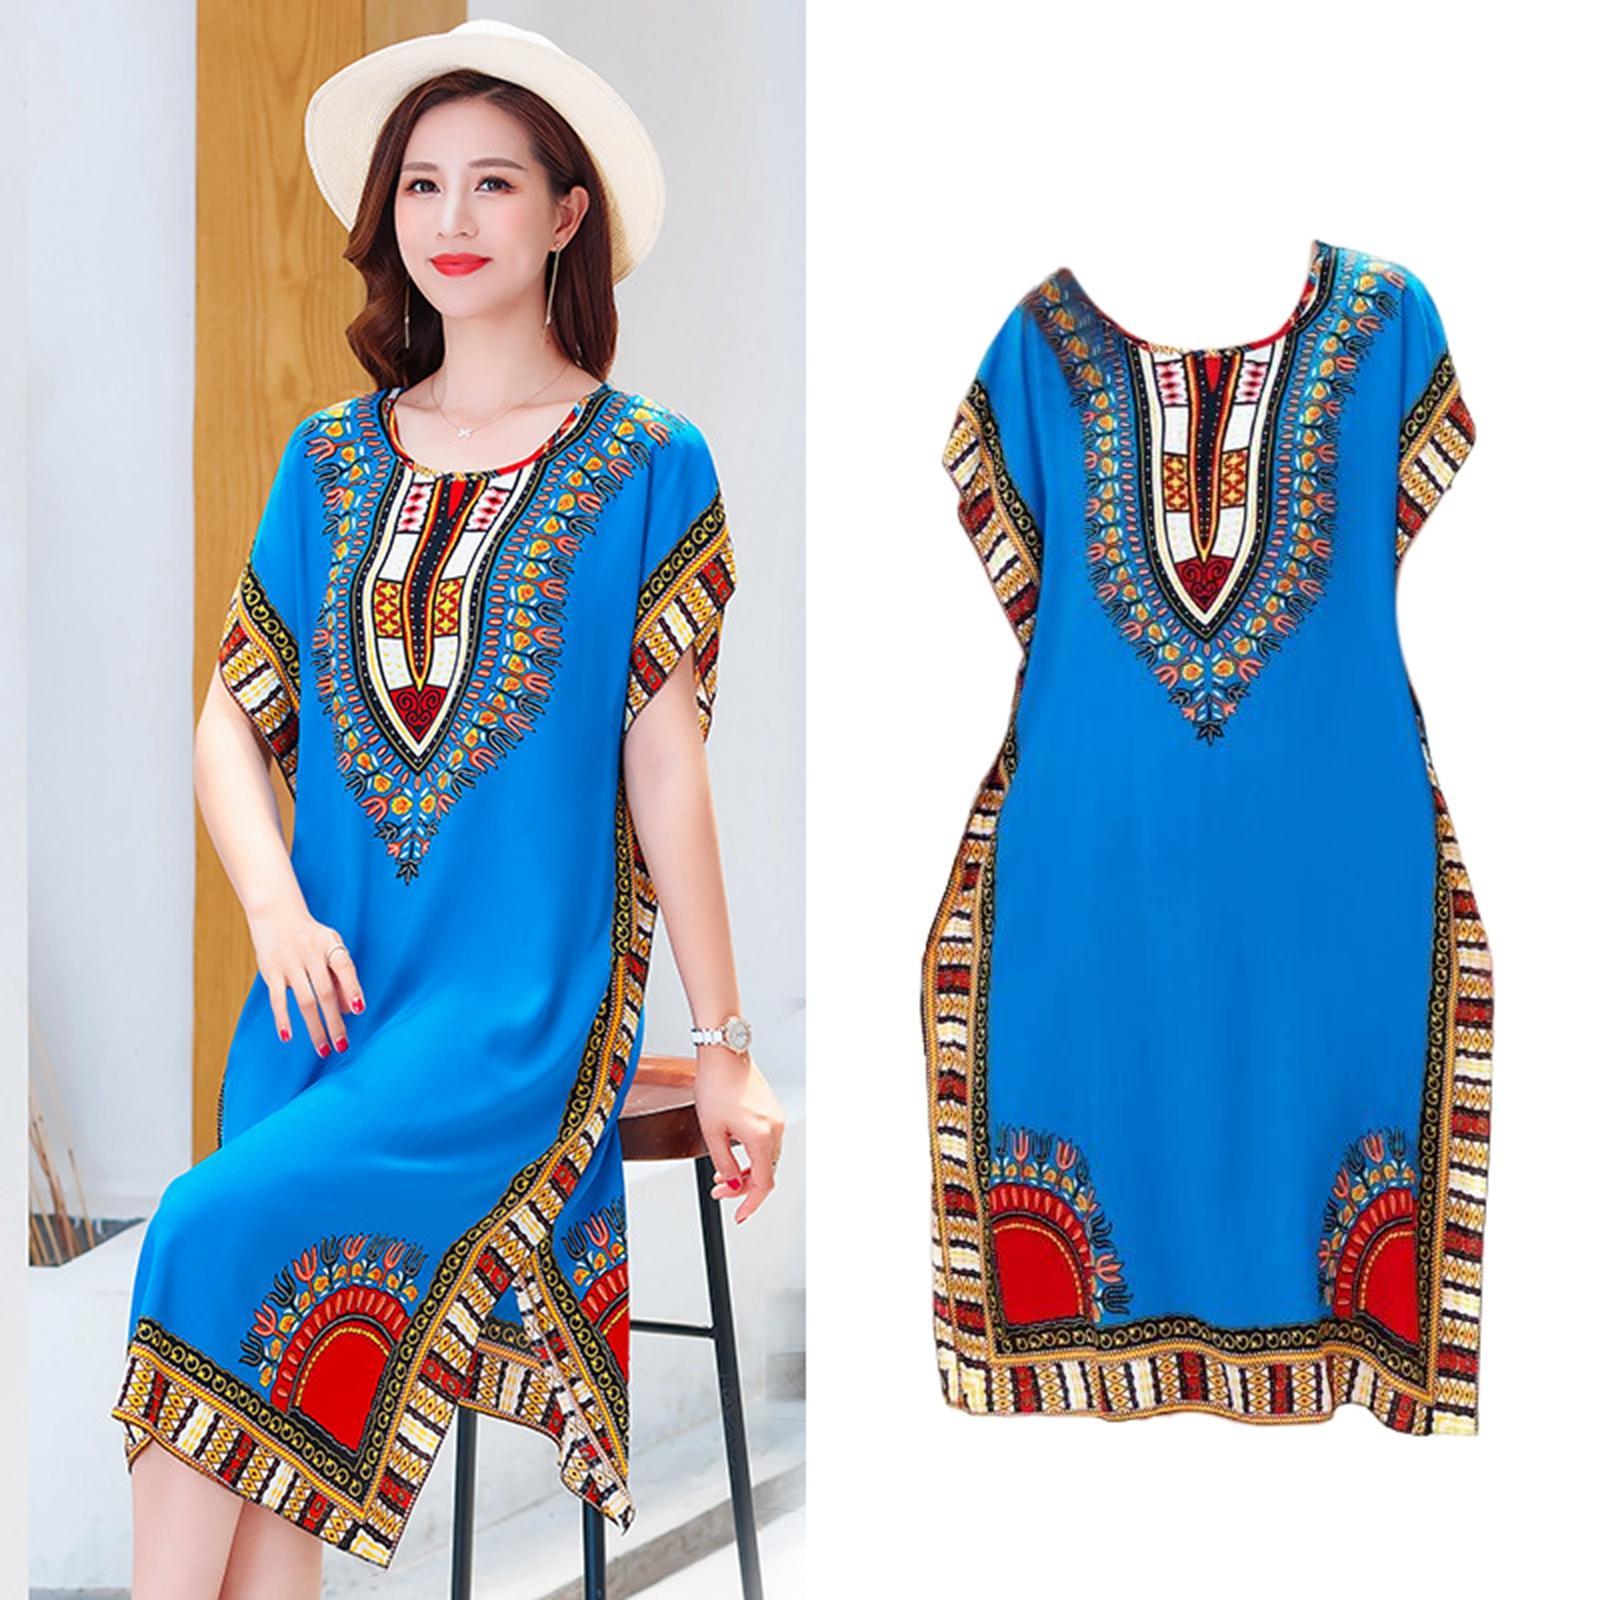 Women's Fashion Beach Holiday Dress Boho Elegant Ethnic Dress Loose Tunic Blue